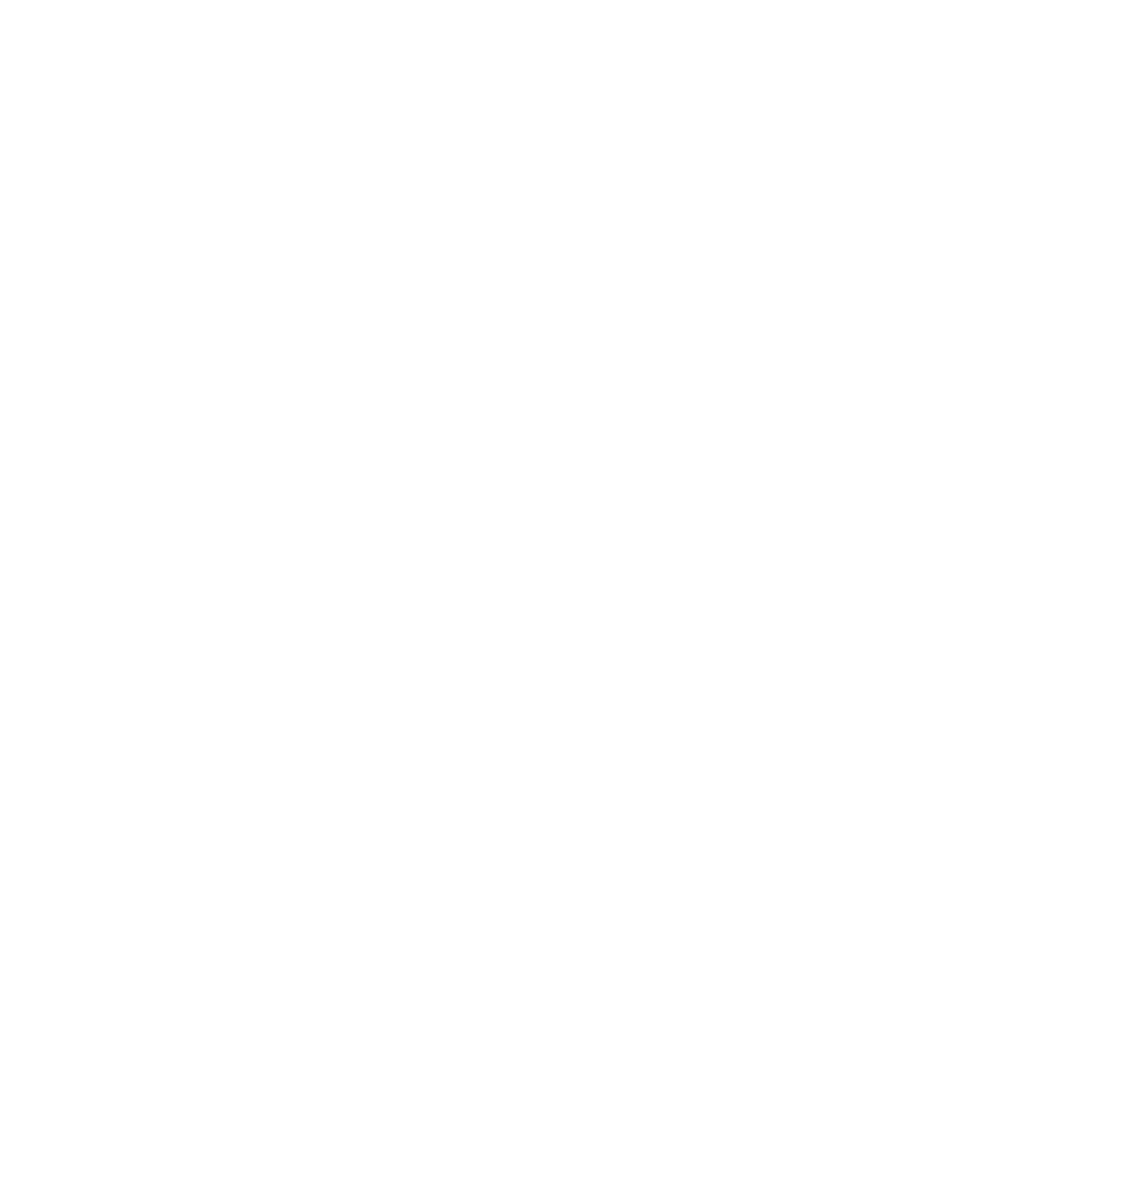 Broncos_prim_mono_neg_0_0